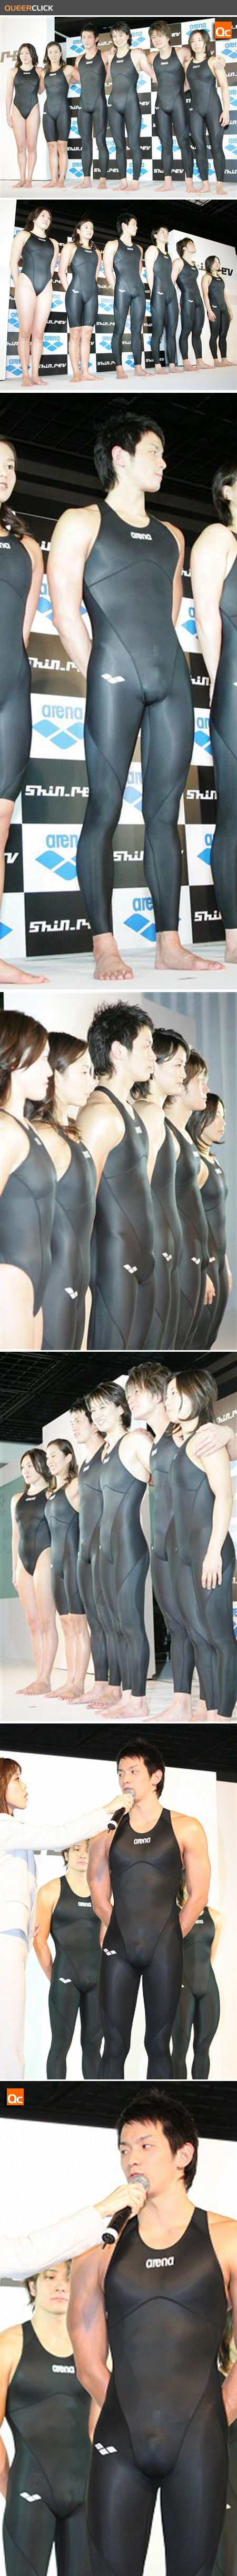 japanese_swimming_wear.jpg